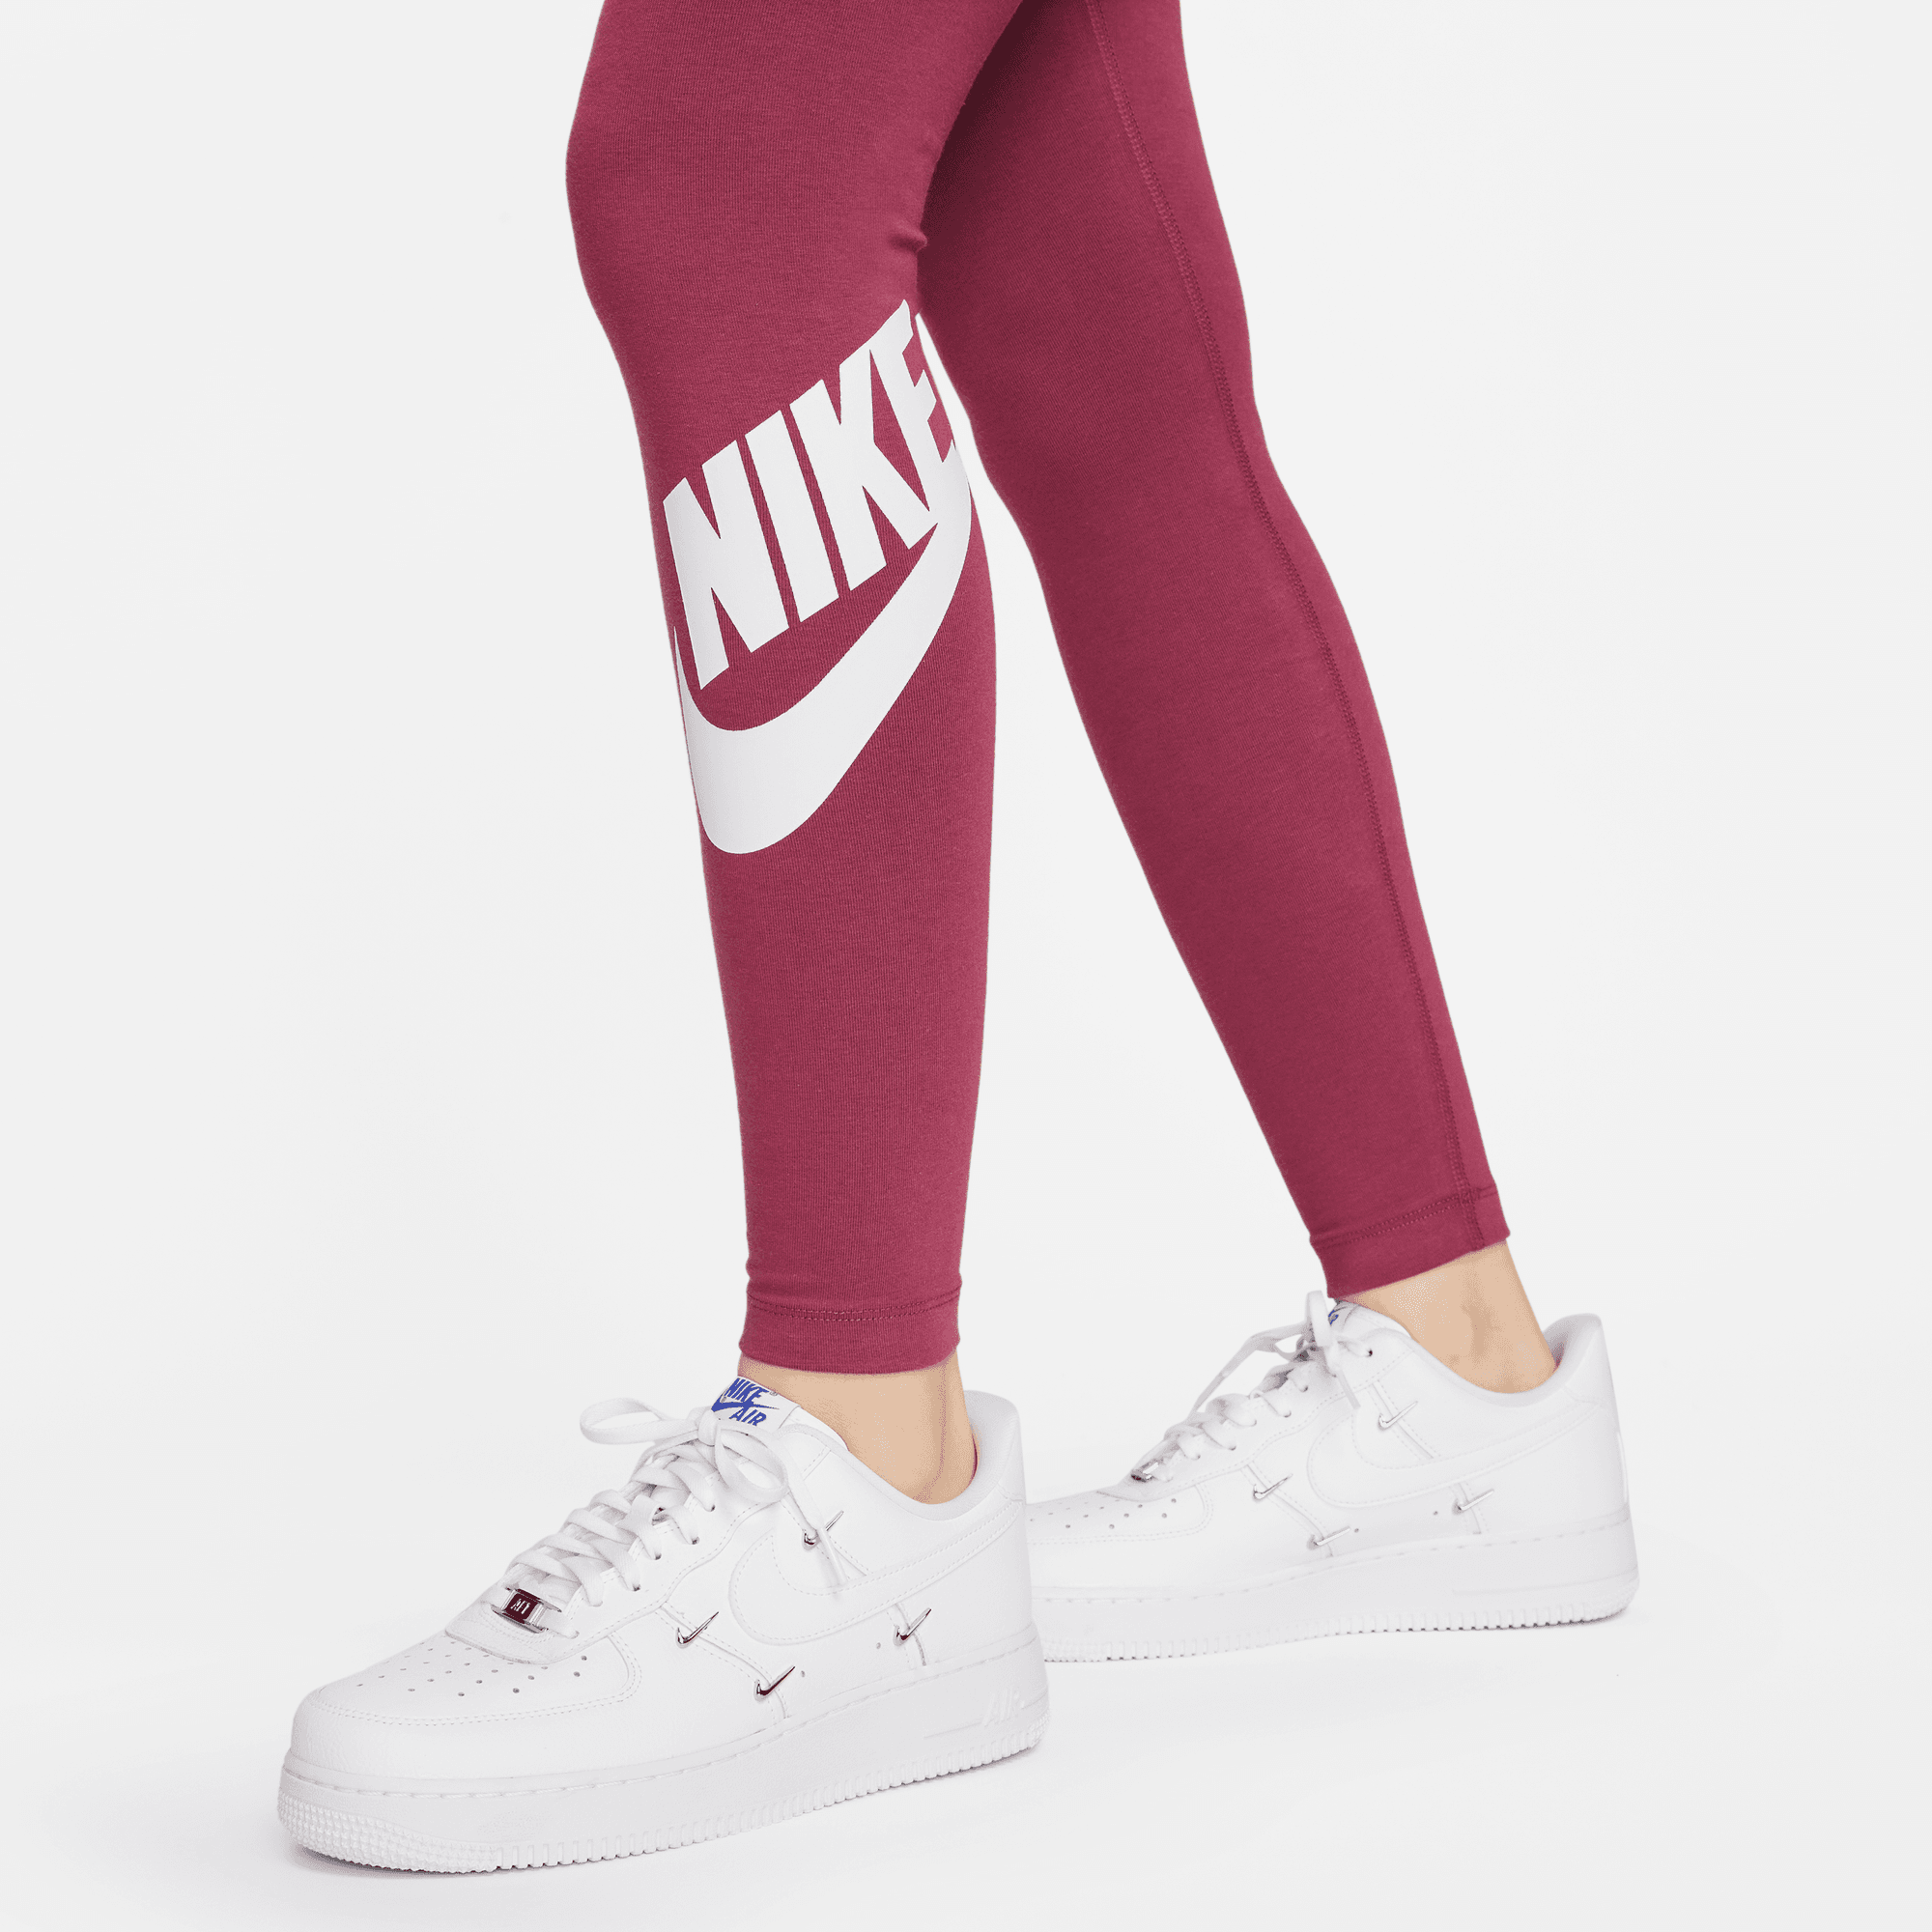 Nike Sportswear Legasee High Waisted Leggings Women's S Grey